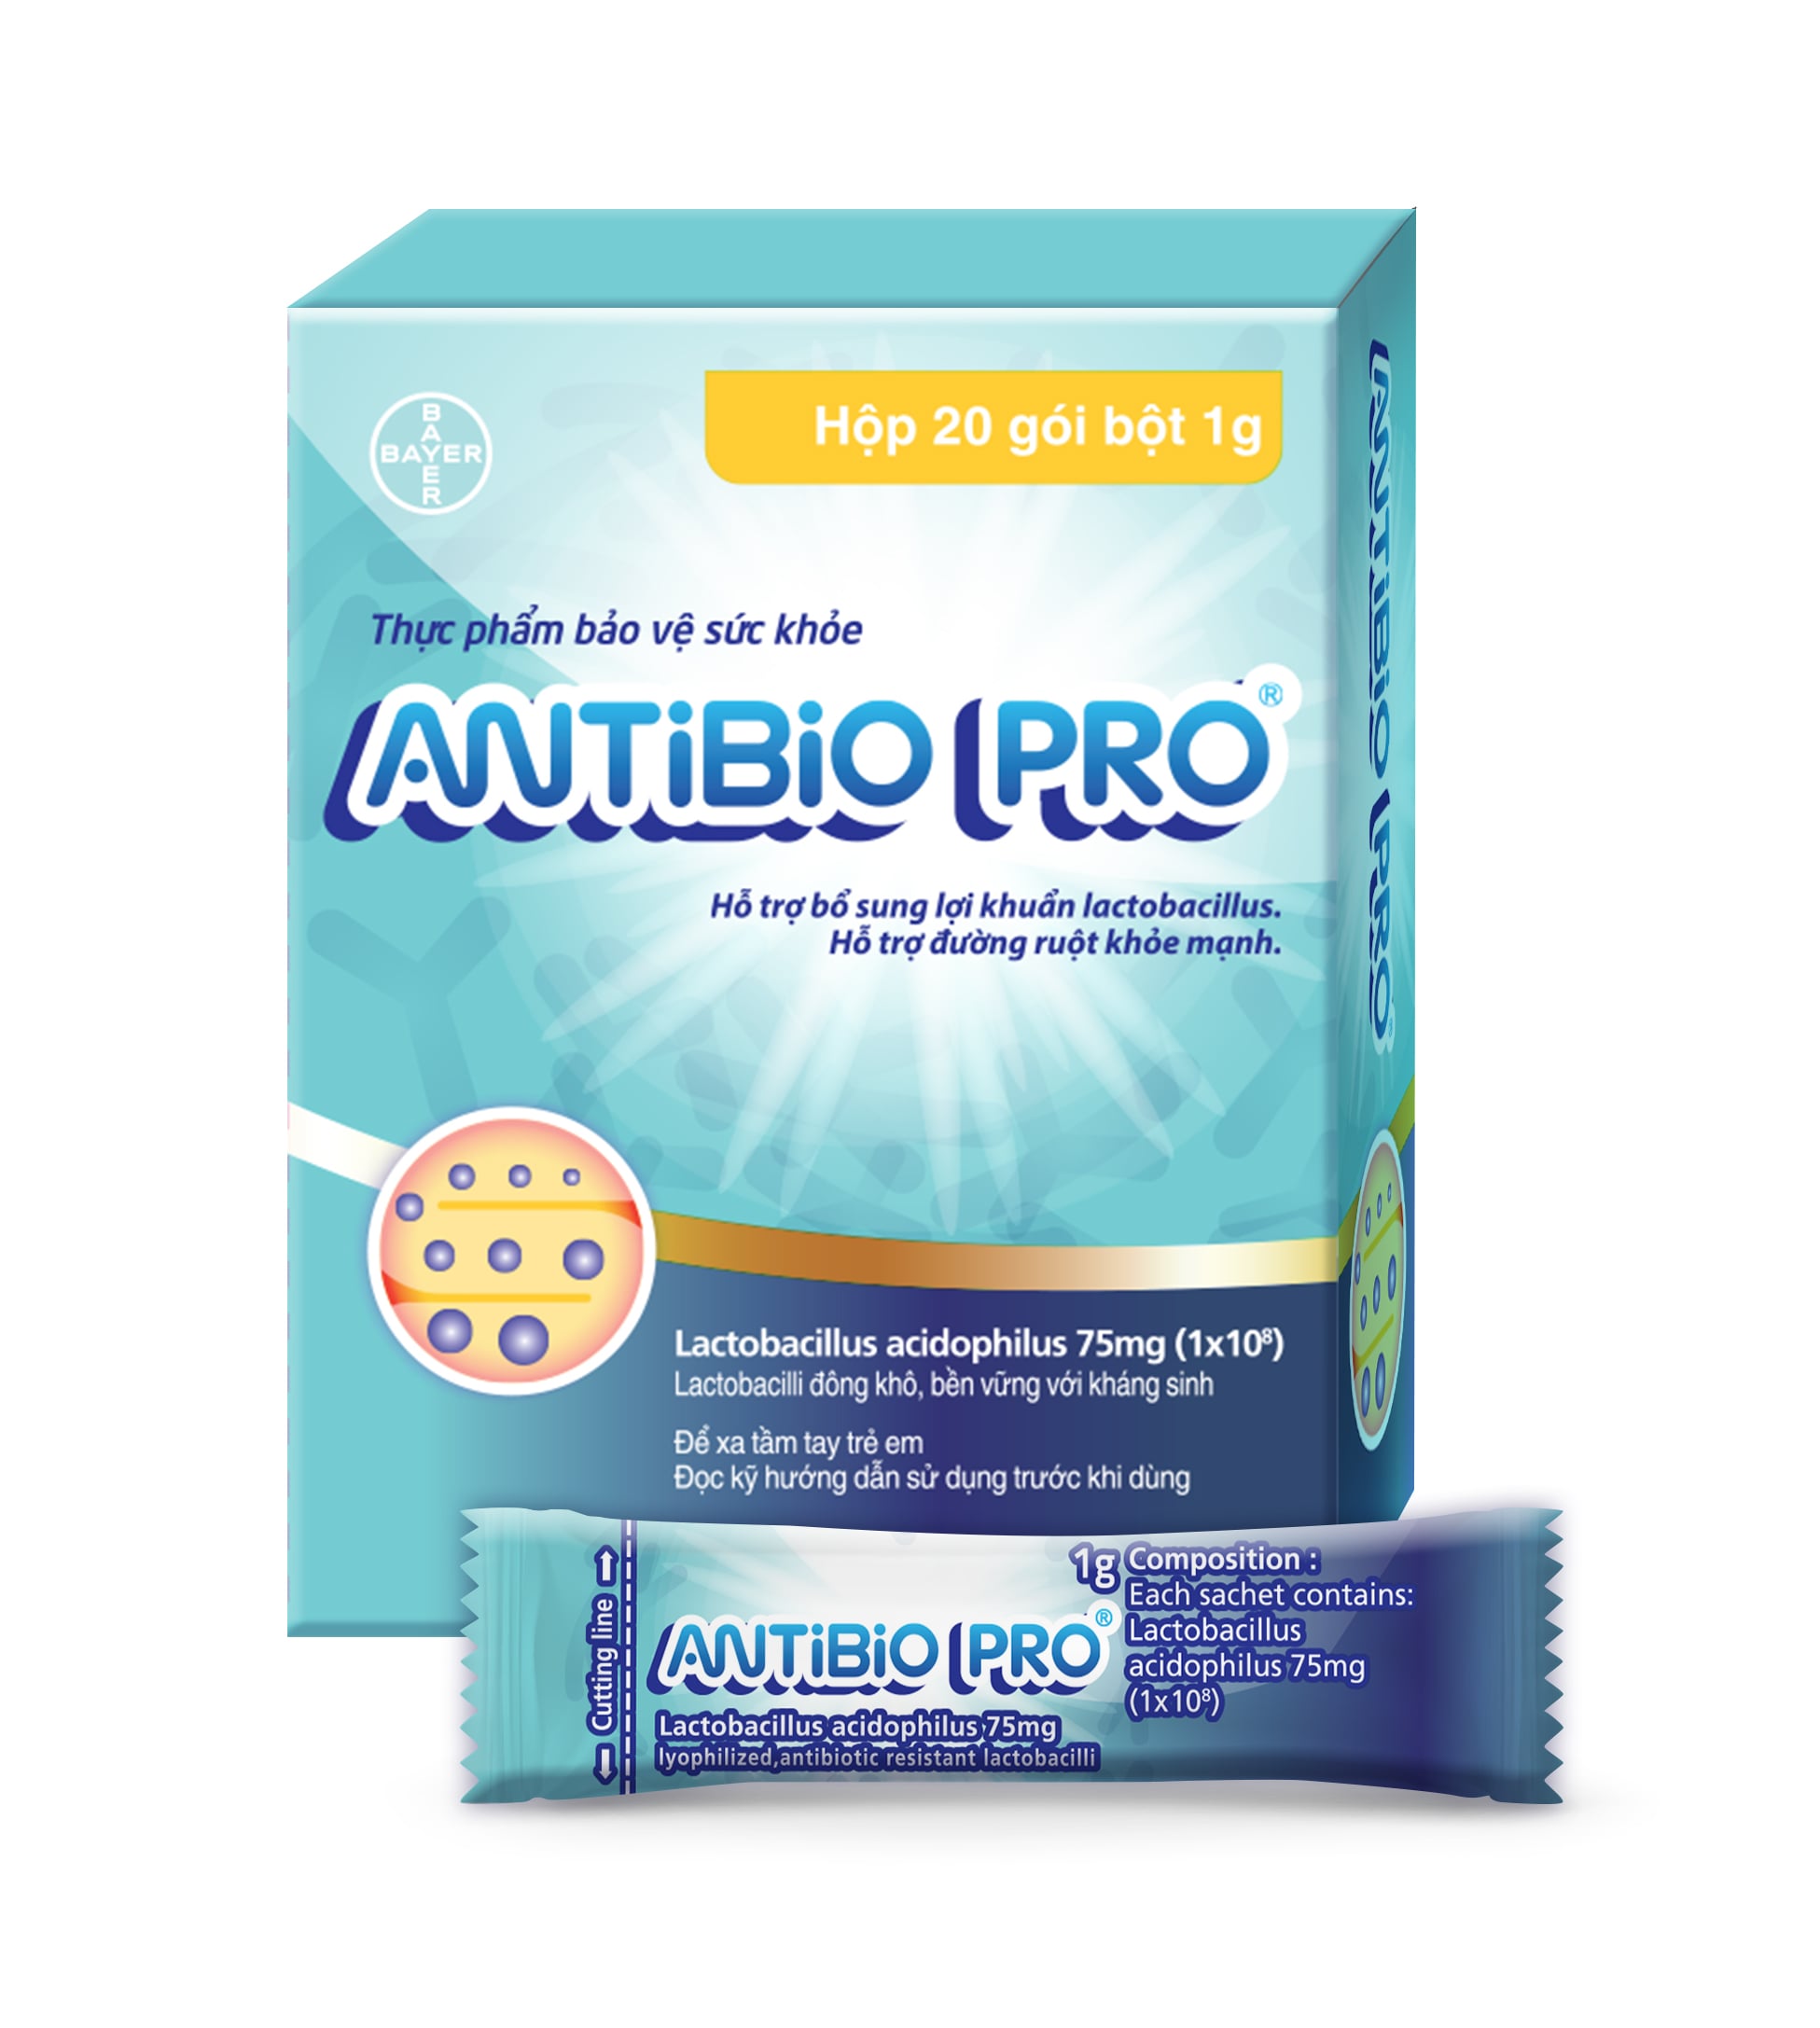 Thực Phẩm Bảo Vệ Sức Khỏe Antibio Pro